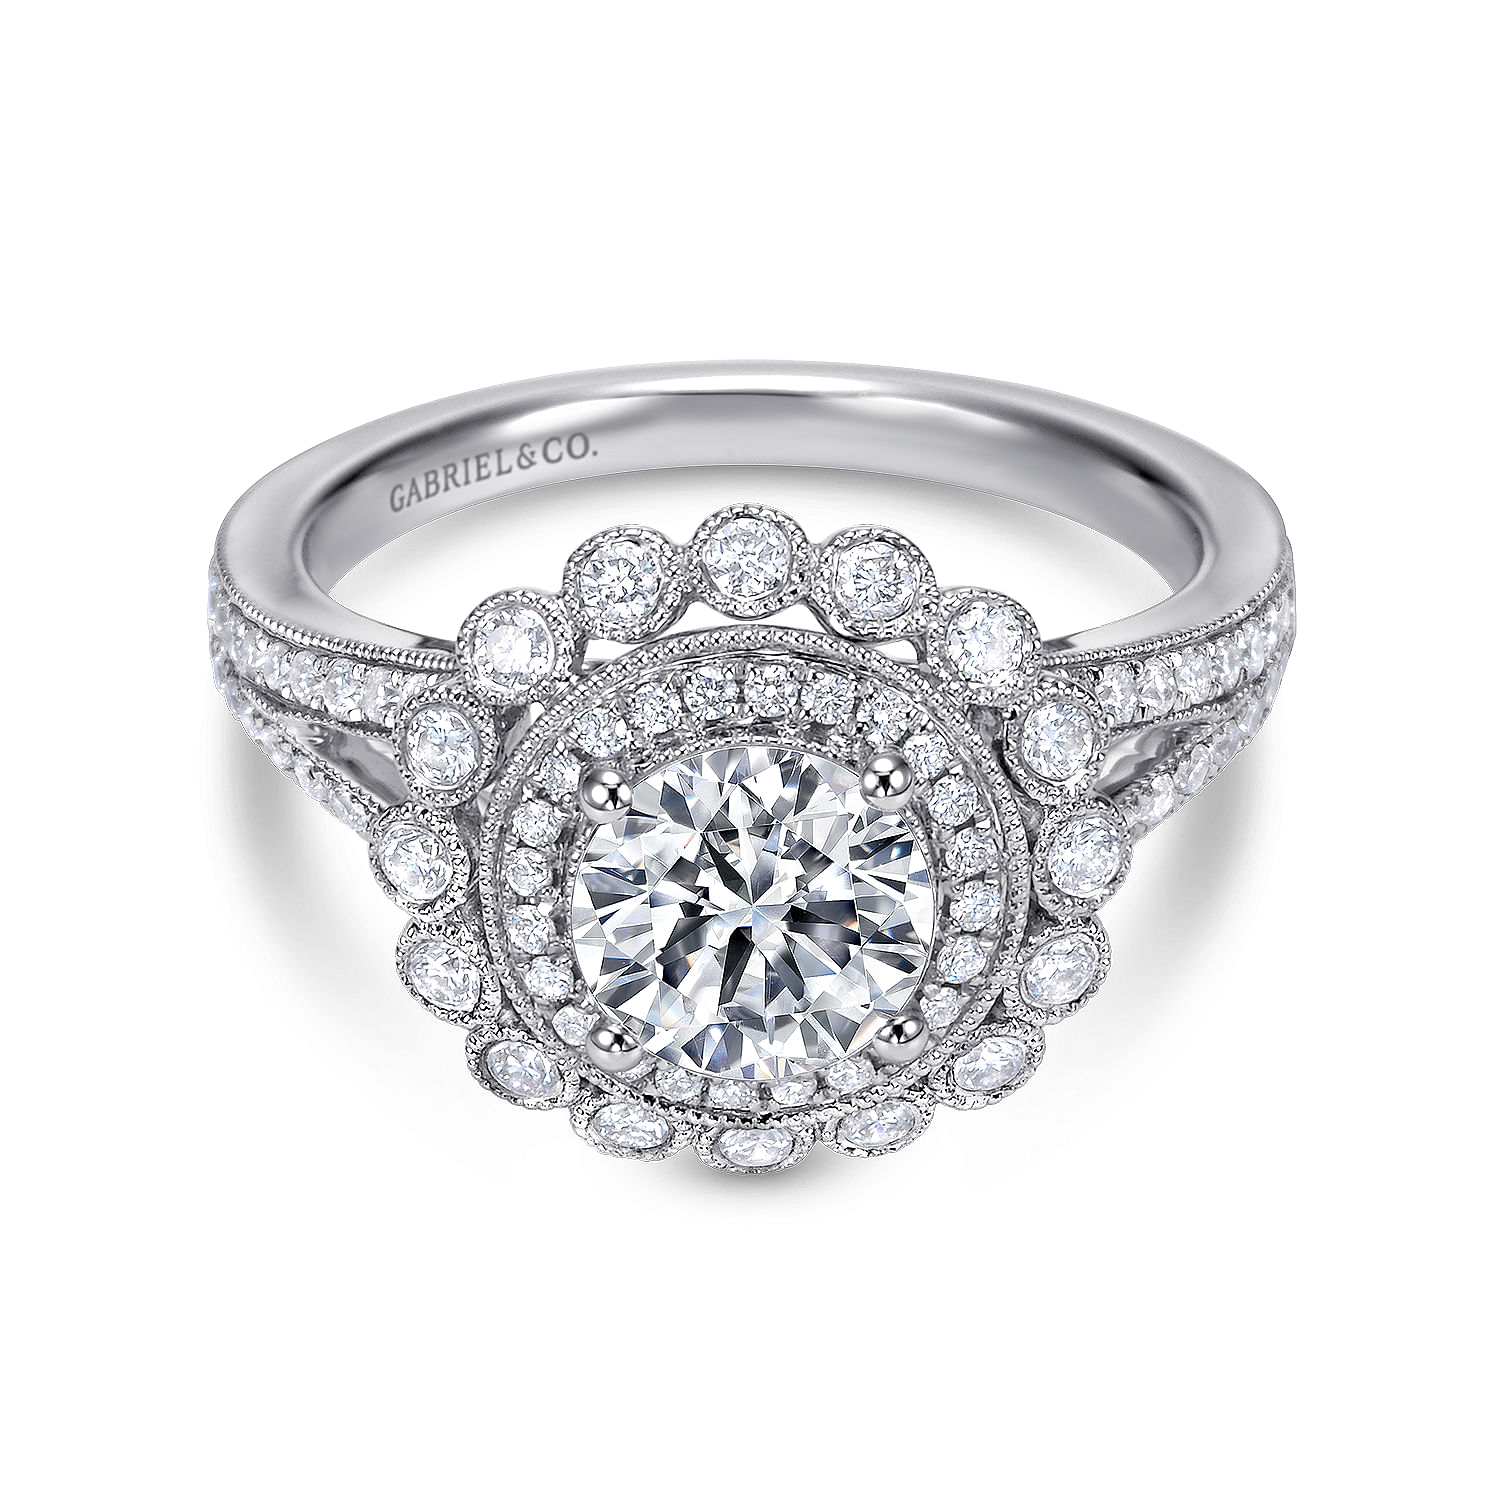 Vintage Inspired 14K White Gold Round Double Halo Diamond Engagement Ring